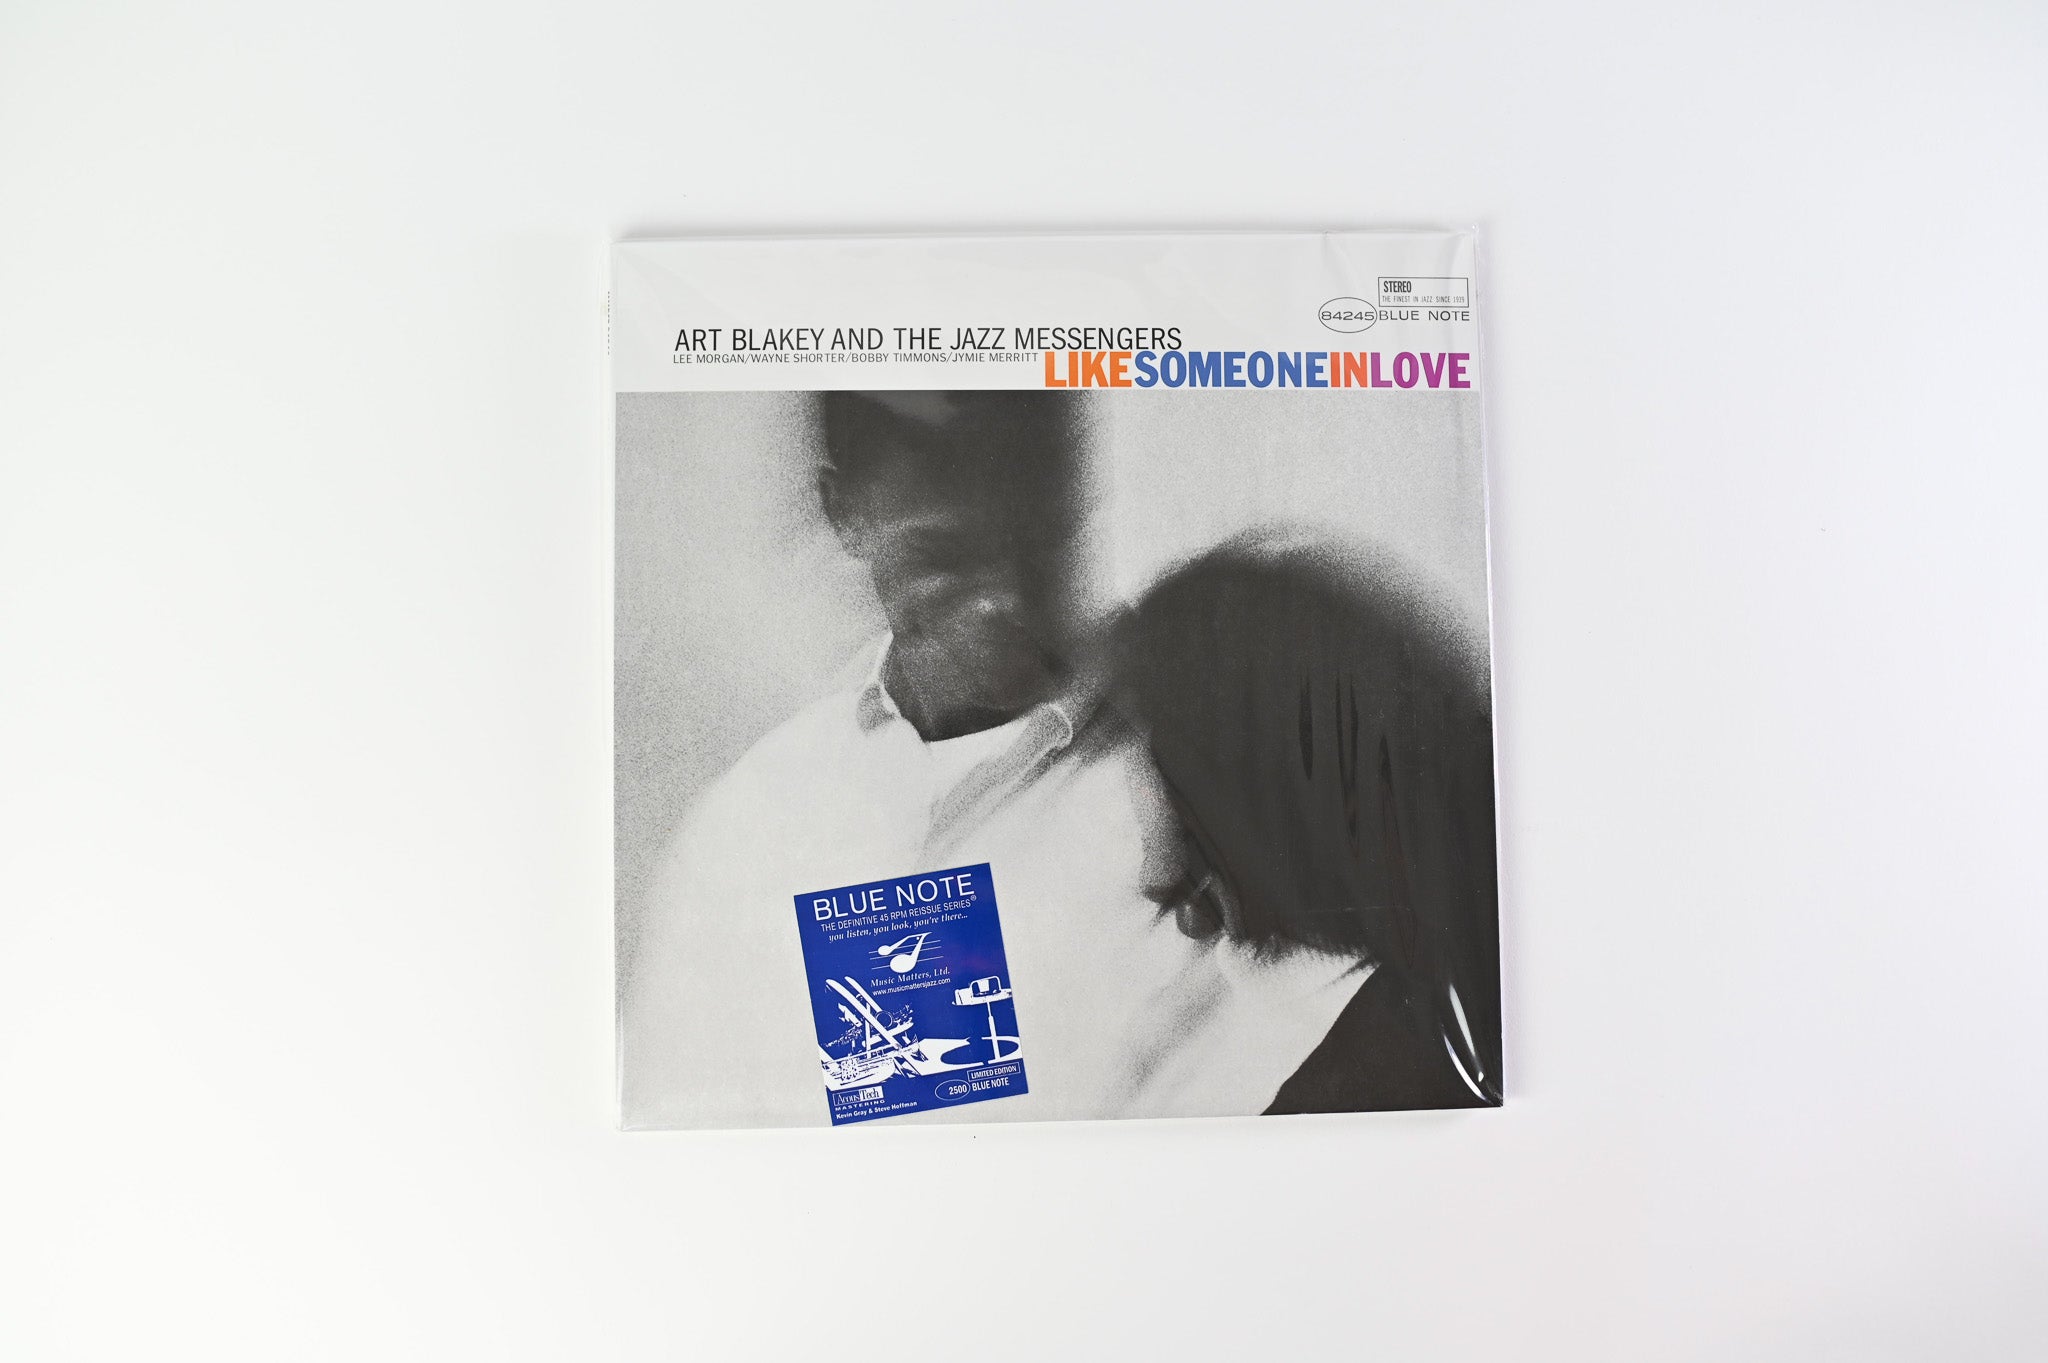 Art Blakey & The Jazz Messengers - Like Someone In Love on Blue Note Music Matters Ltd Reissue 45 RPM